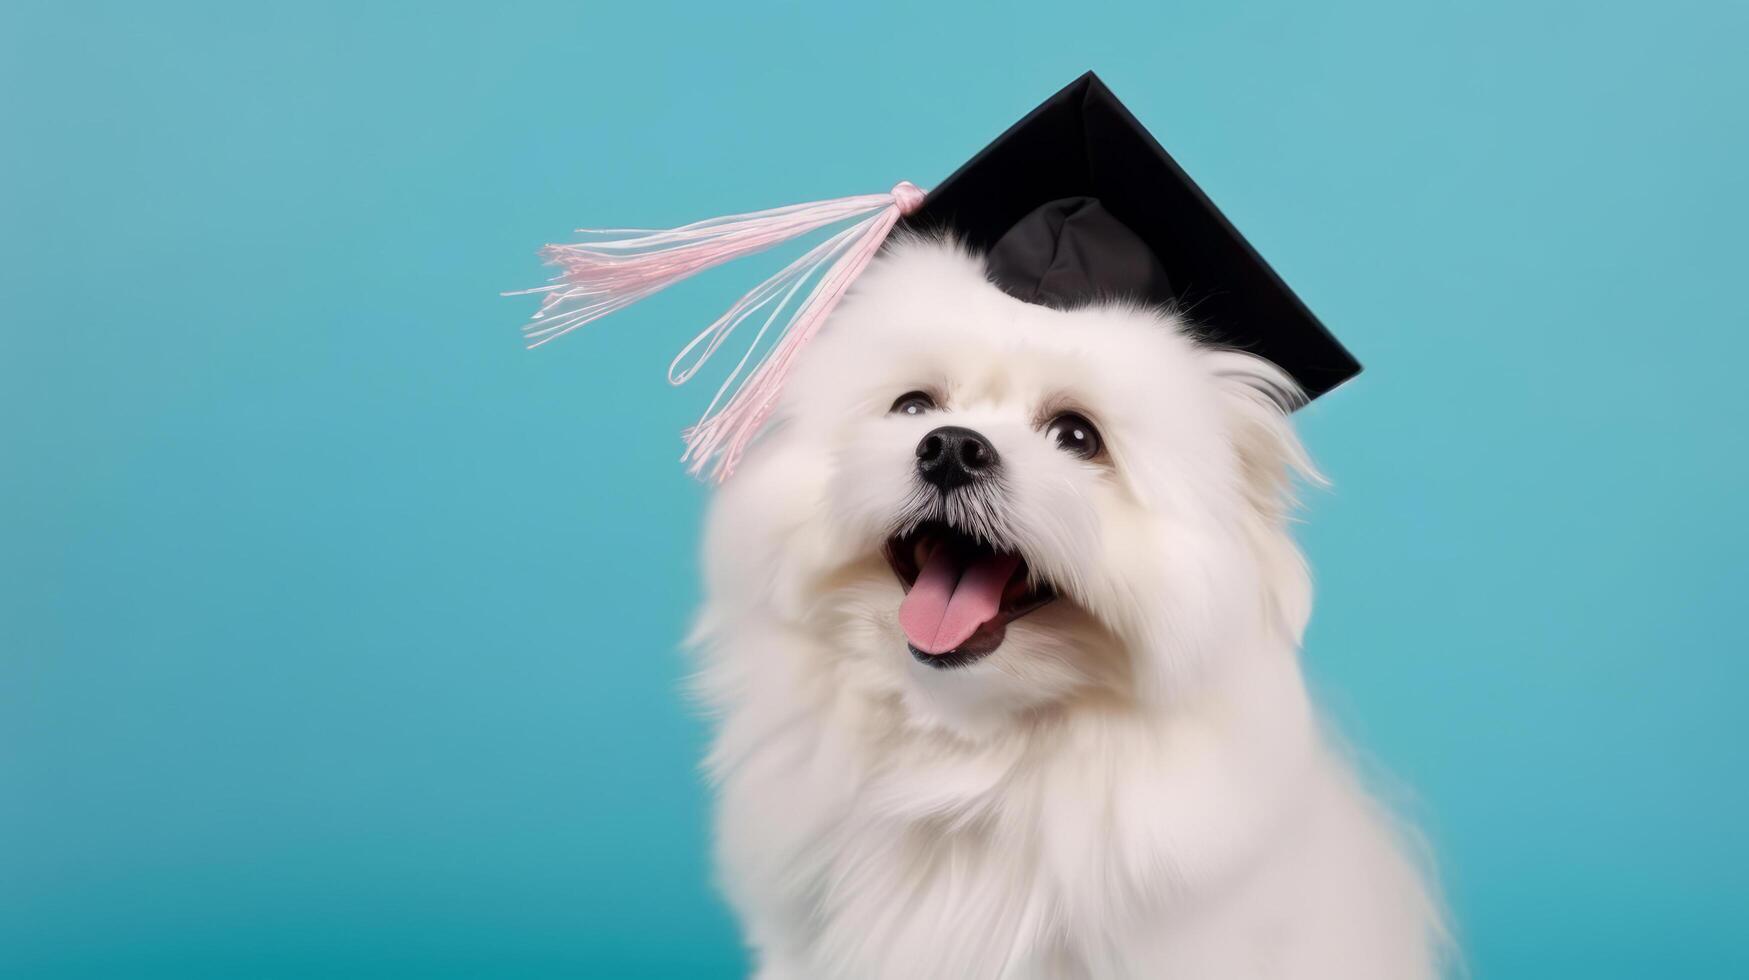 Cute dog in graduation cap. Illustration photo